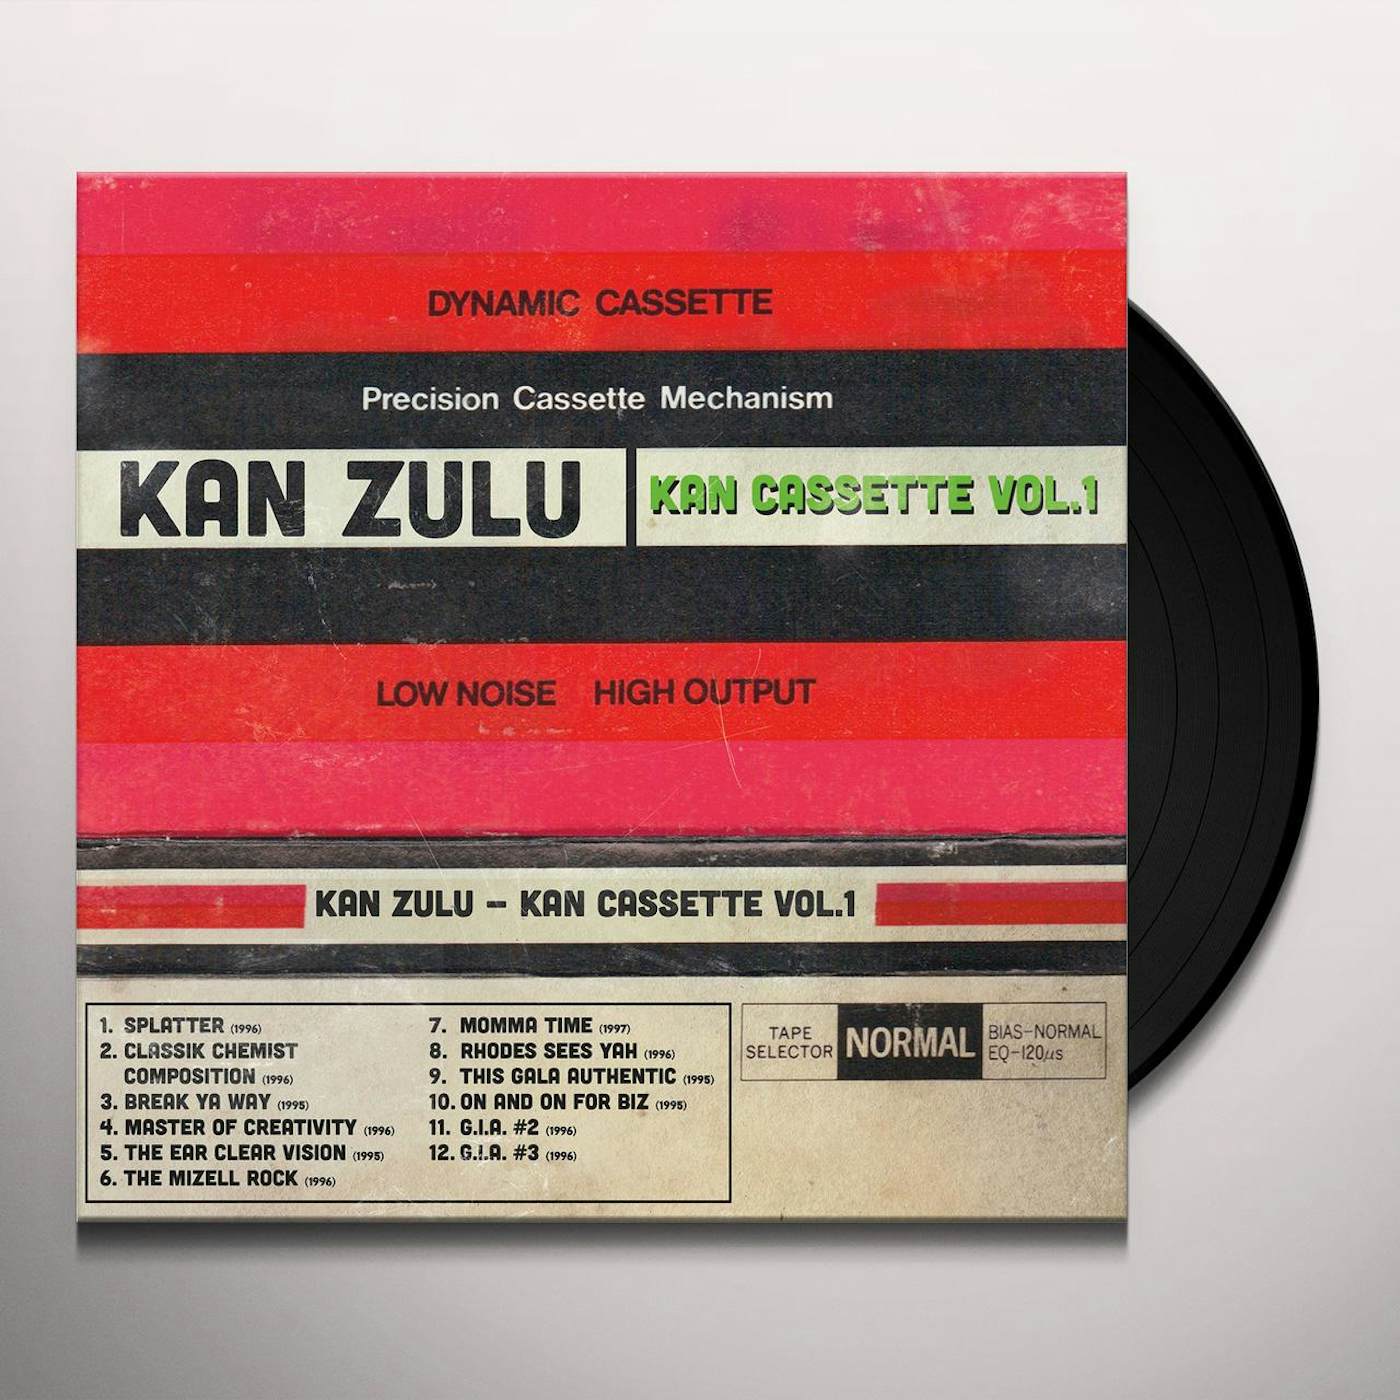 Kankick KAN CASSETTE VOL. 1 Vinyl Record